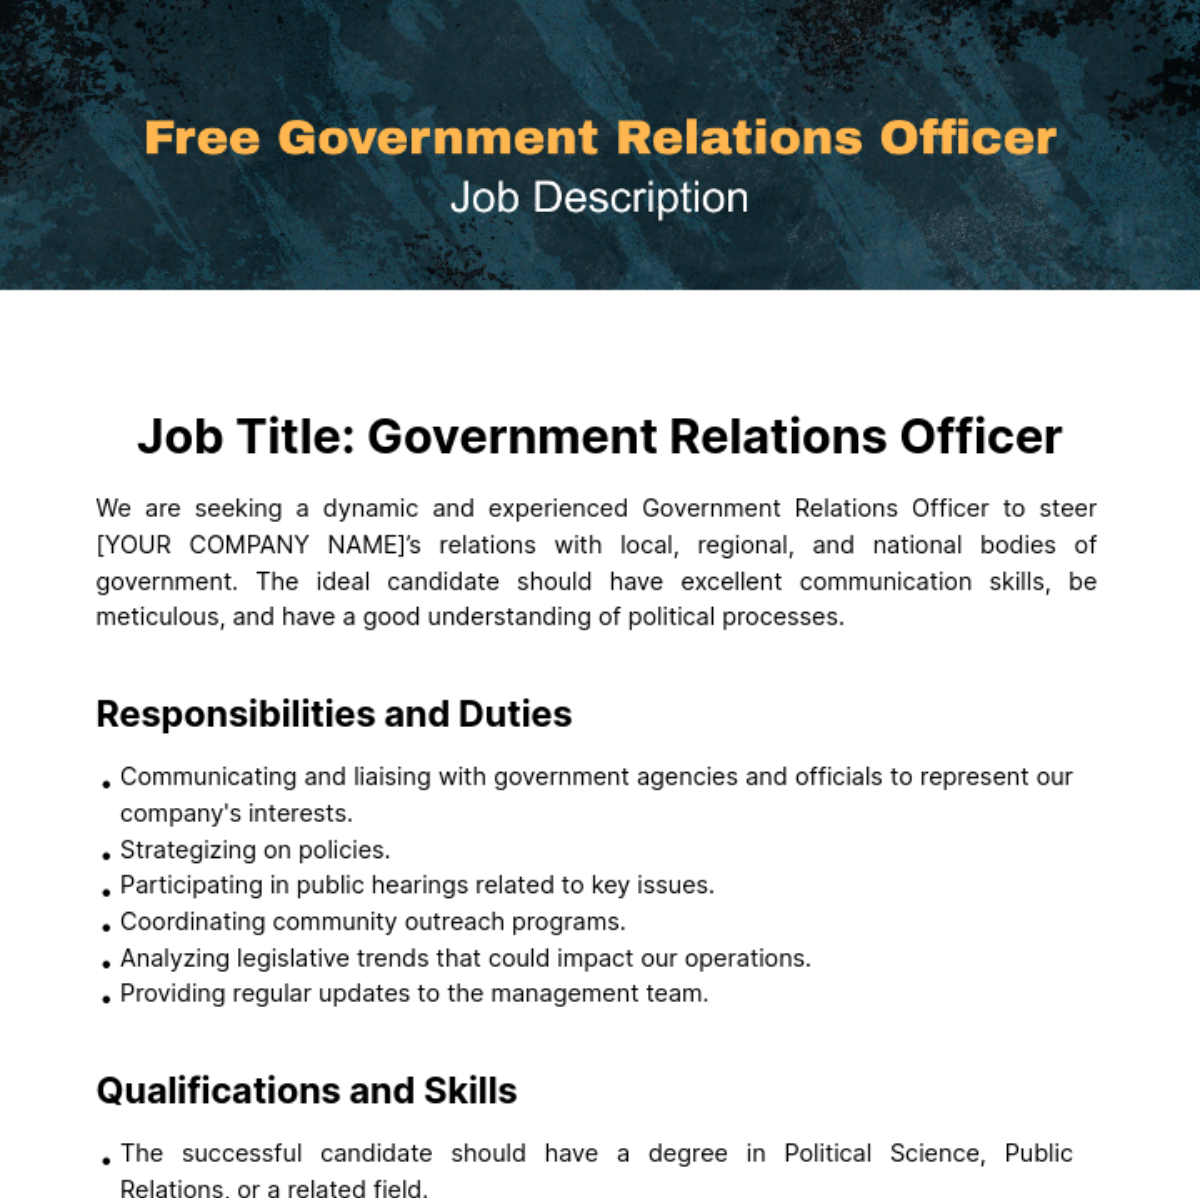 Government Relations Officer Job Description Template